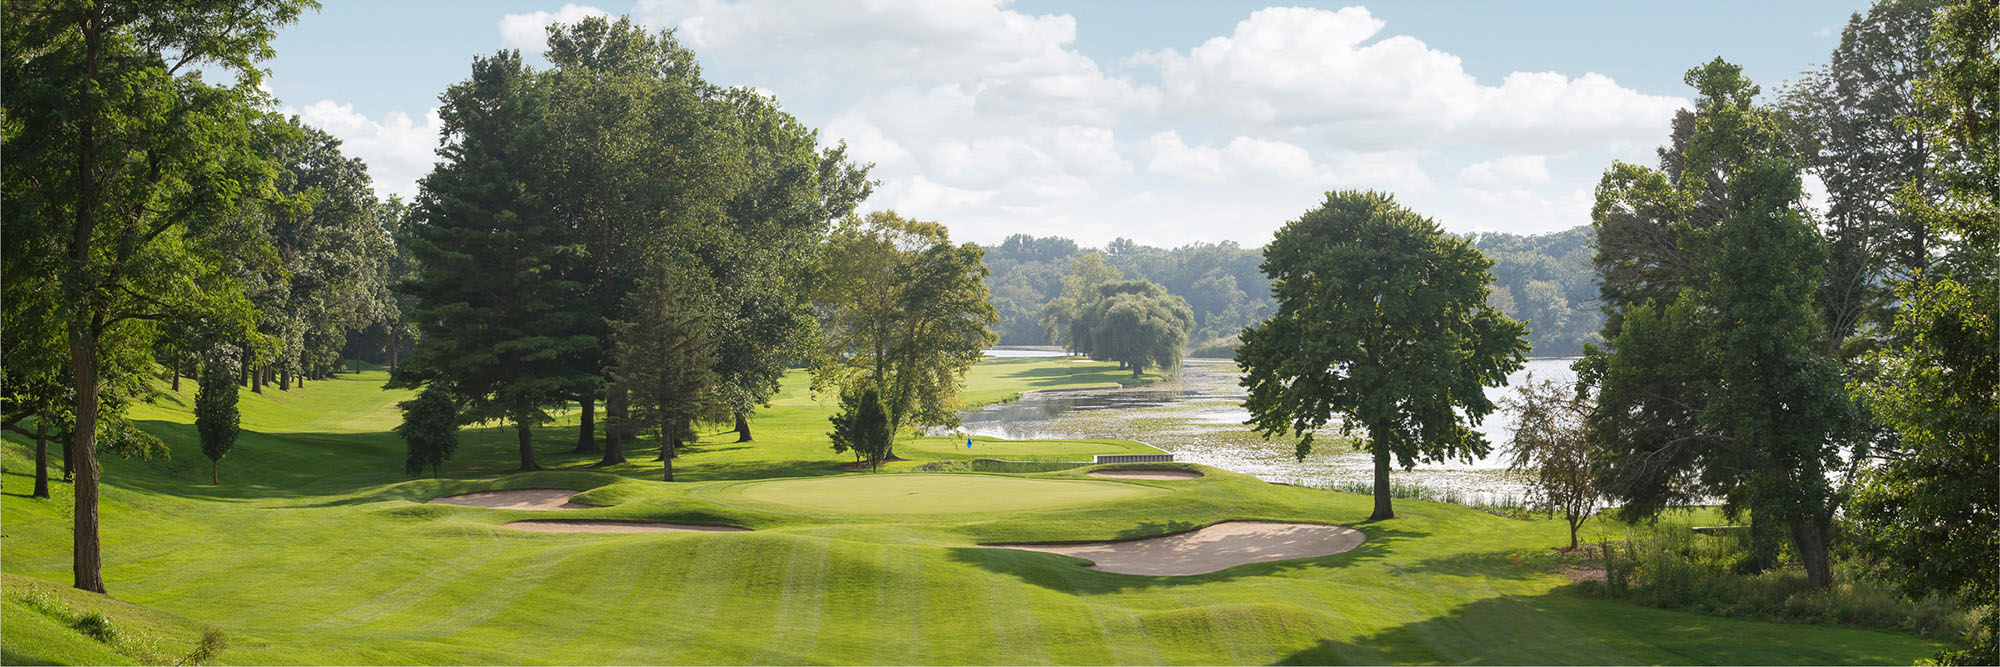 Golf Course Image - South Bend No. 15